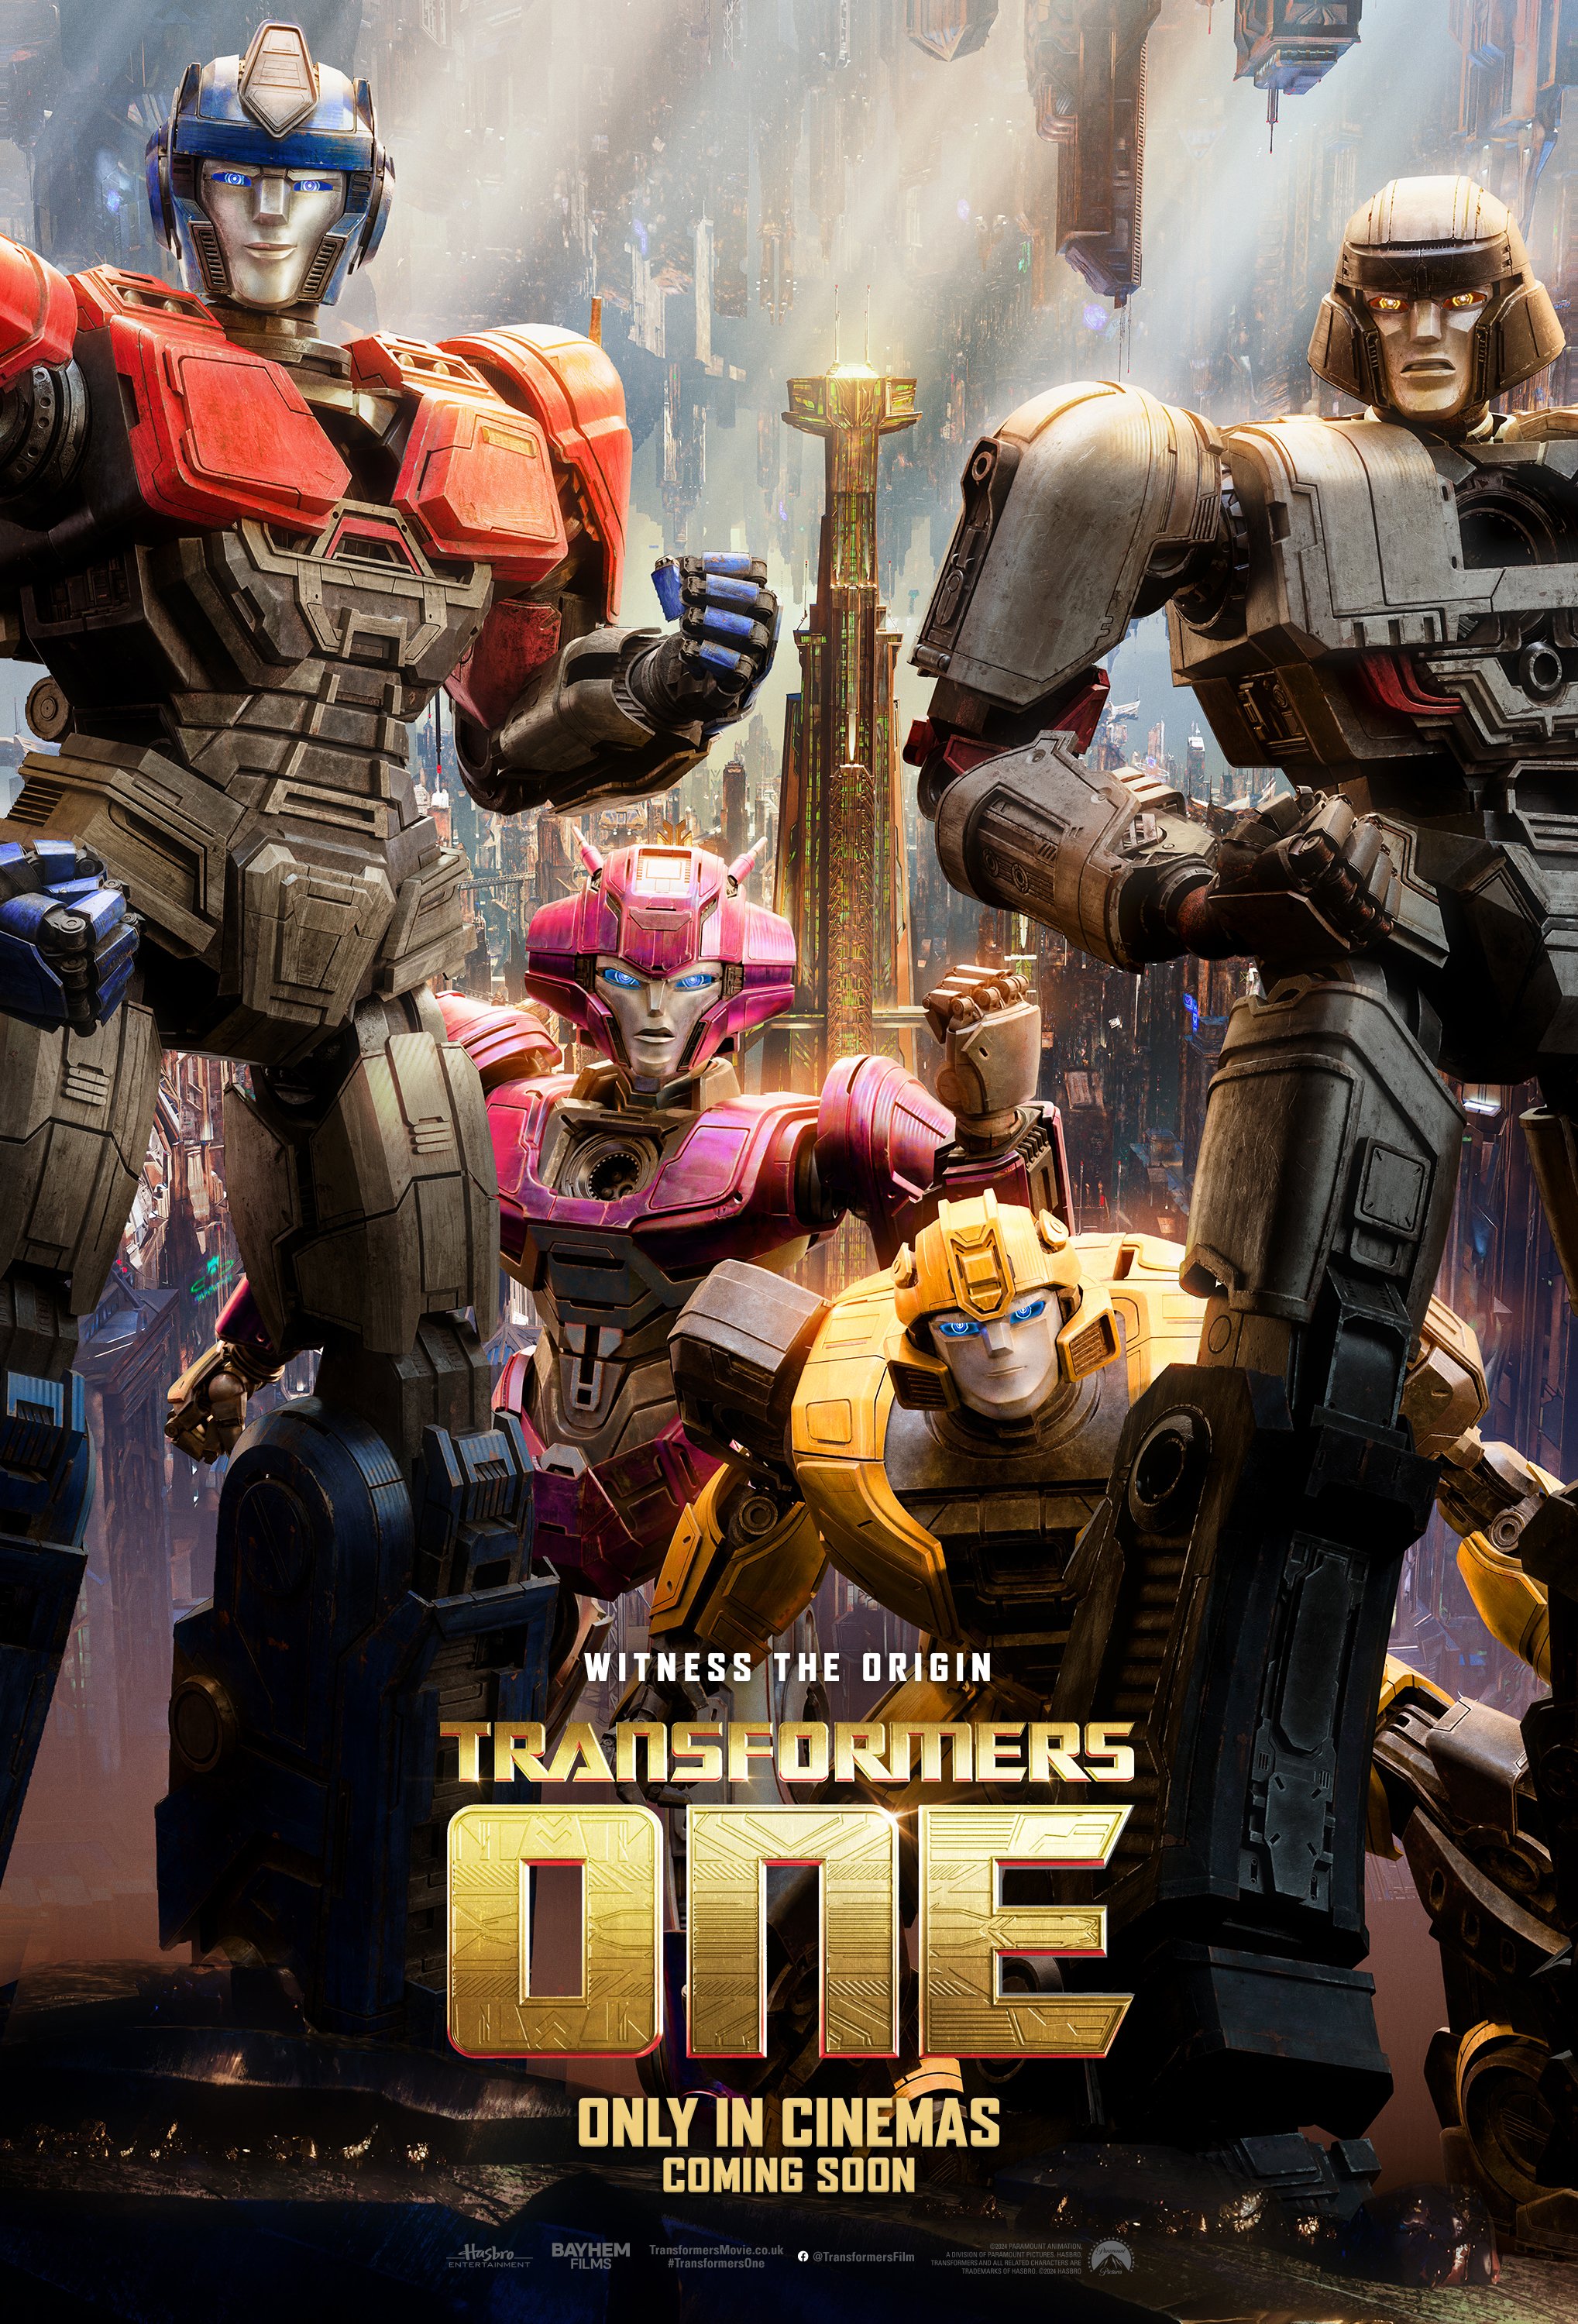 Transformers One lanza su primer avance 17